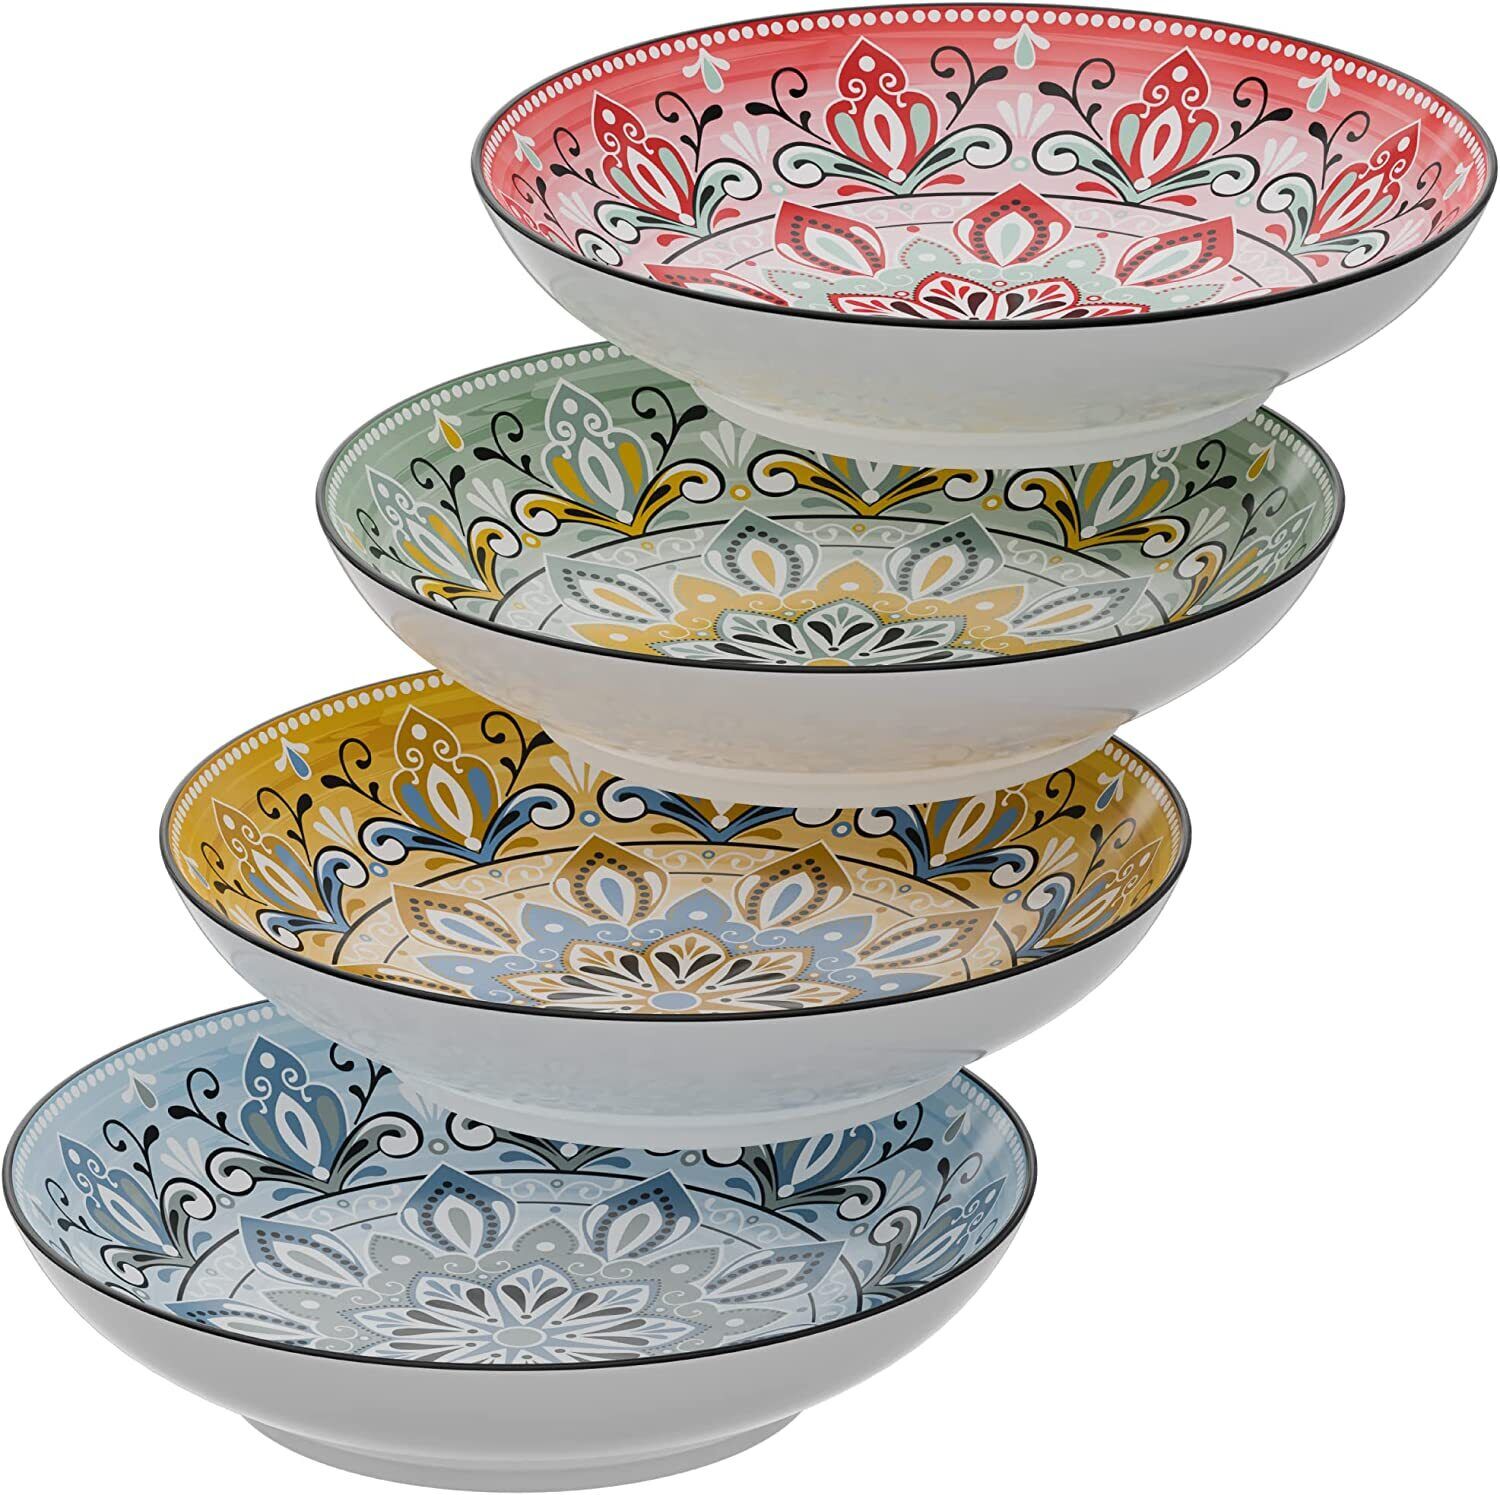 American Atelier Pasta Bowls | Set of 4 Large - Assorted Colors Medallion Motif